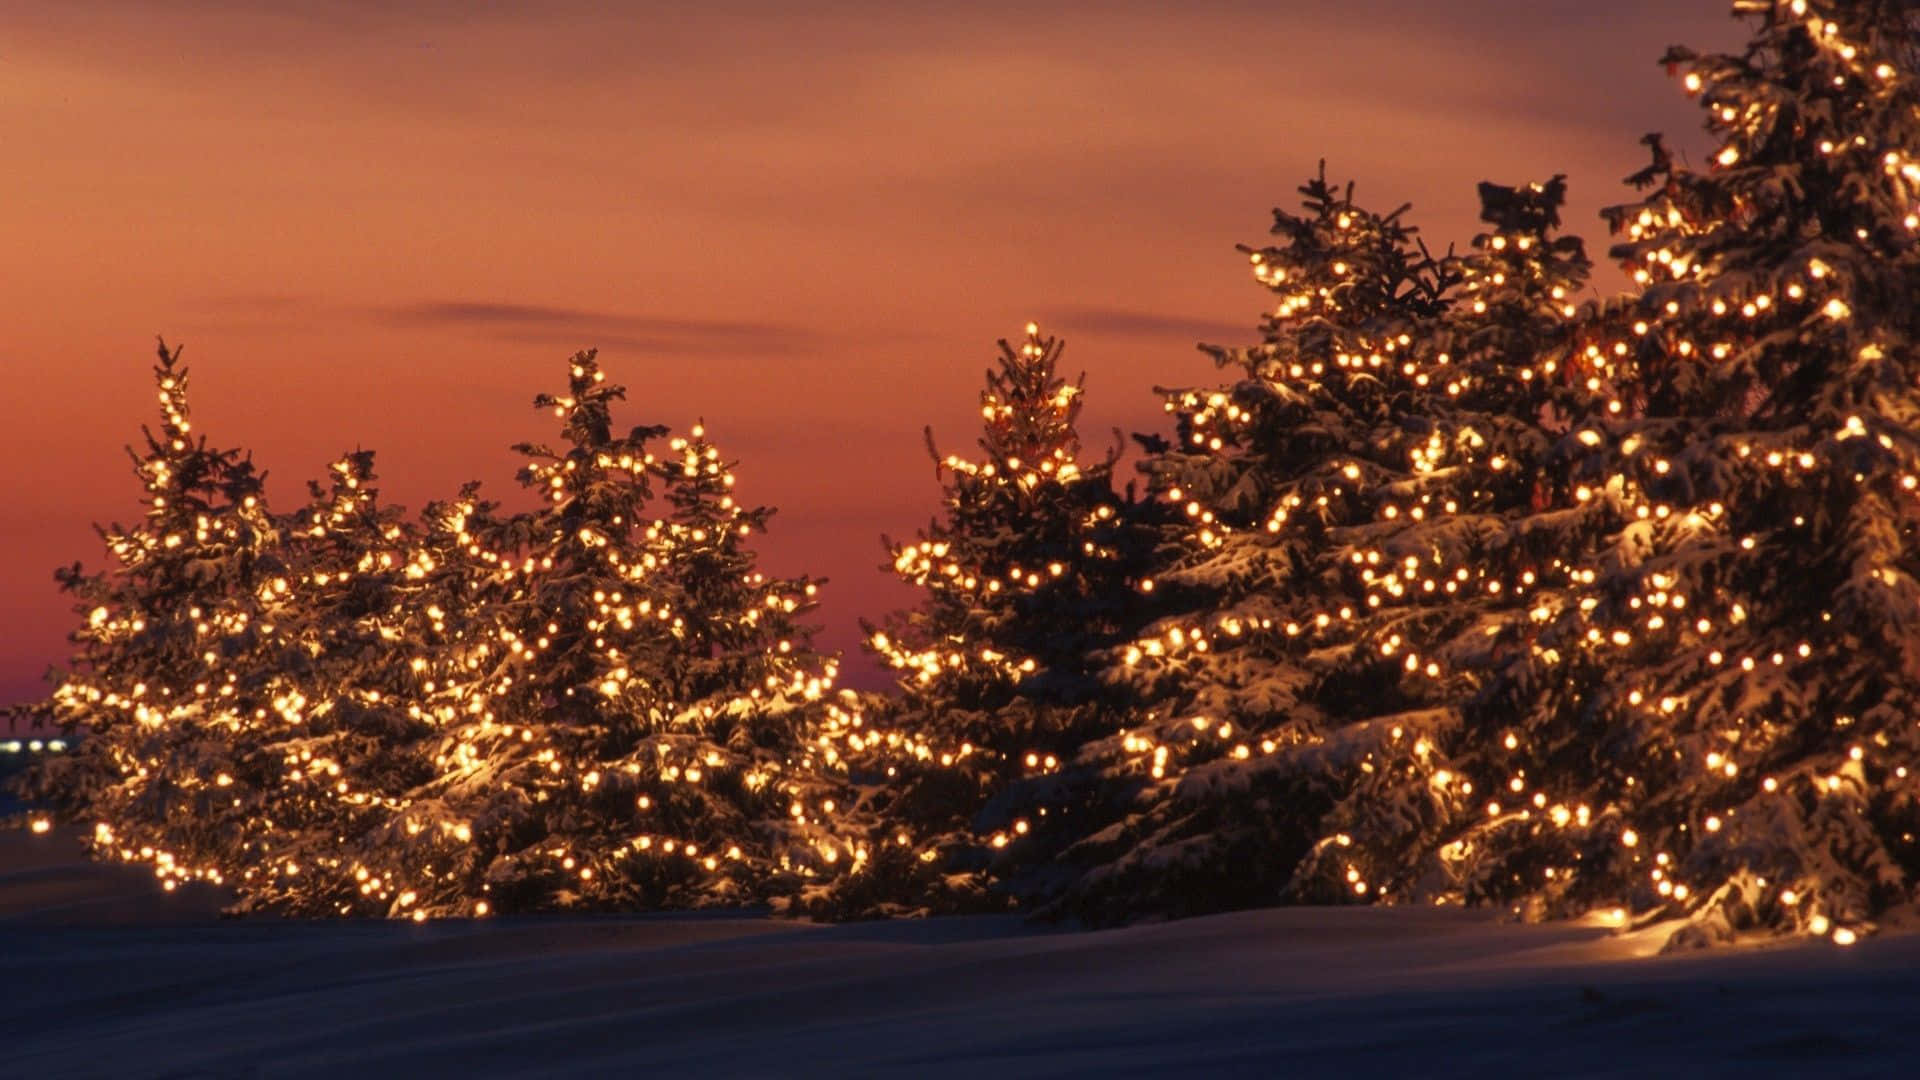 "Festive Winter Wonderland with Christmas Tree and Snowfall"